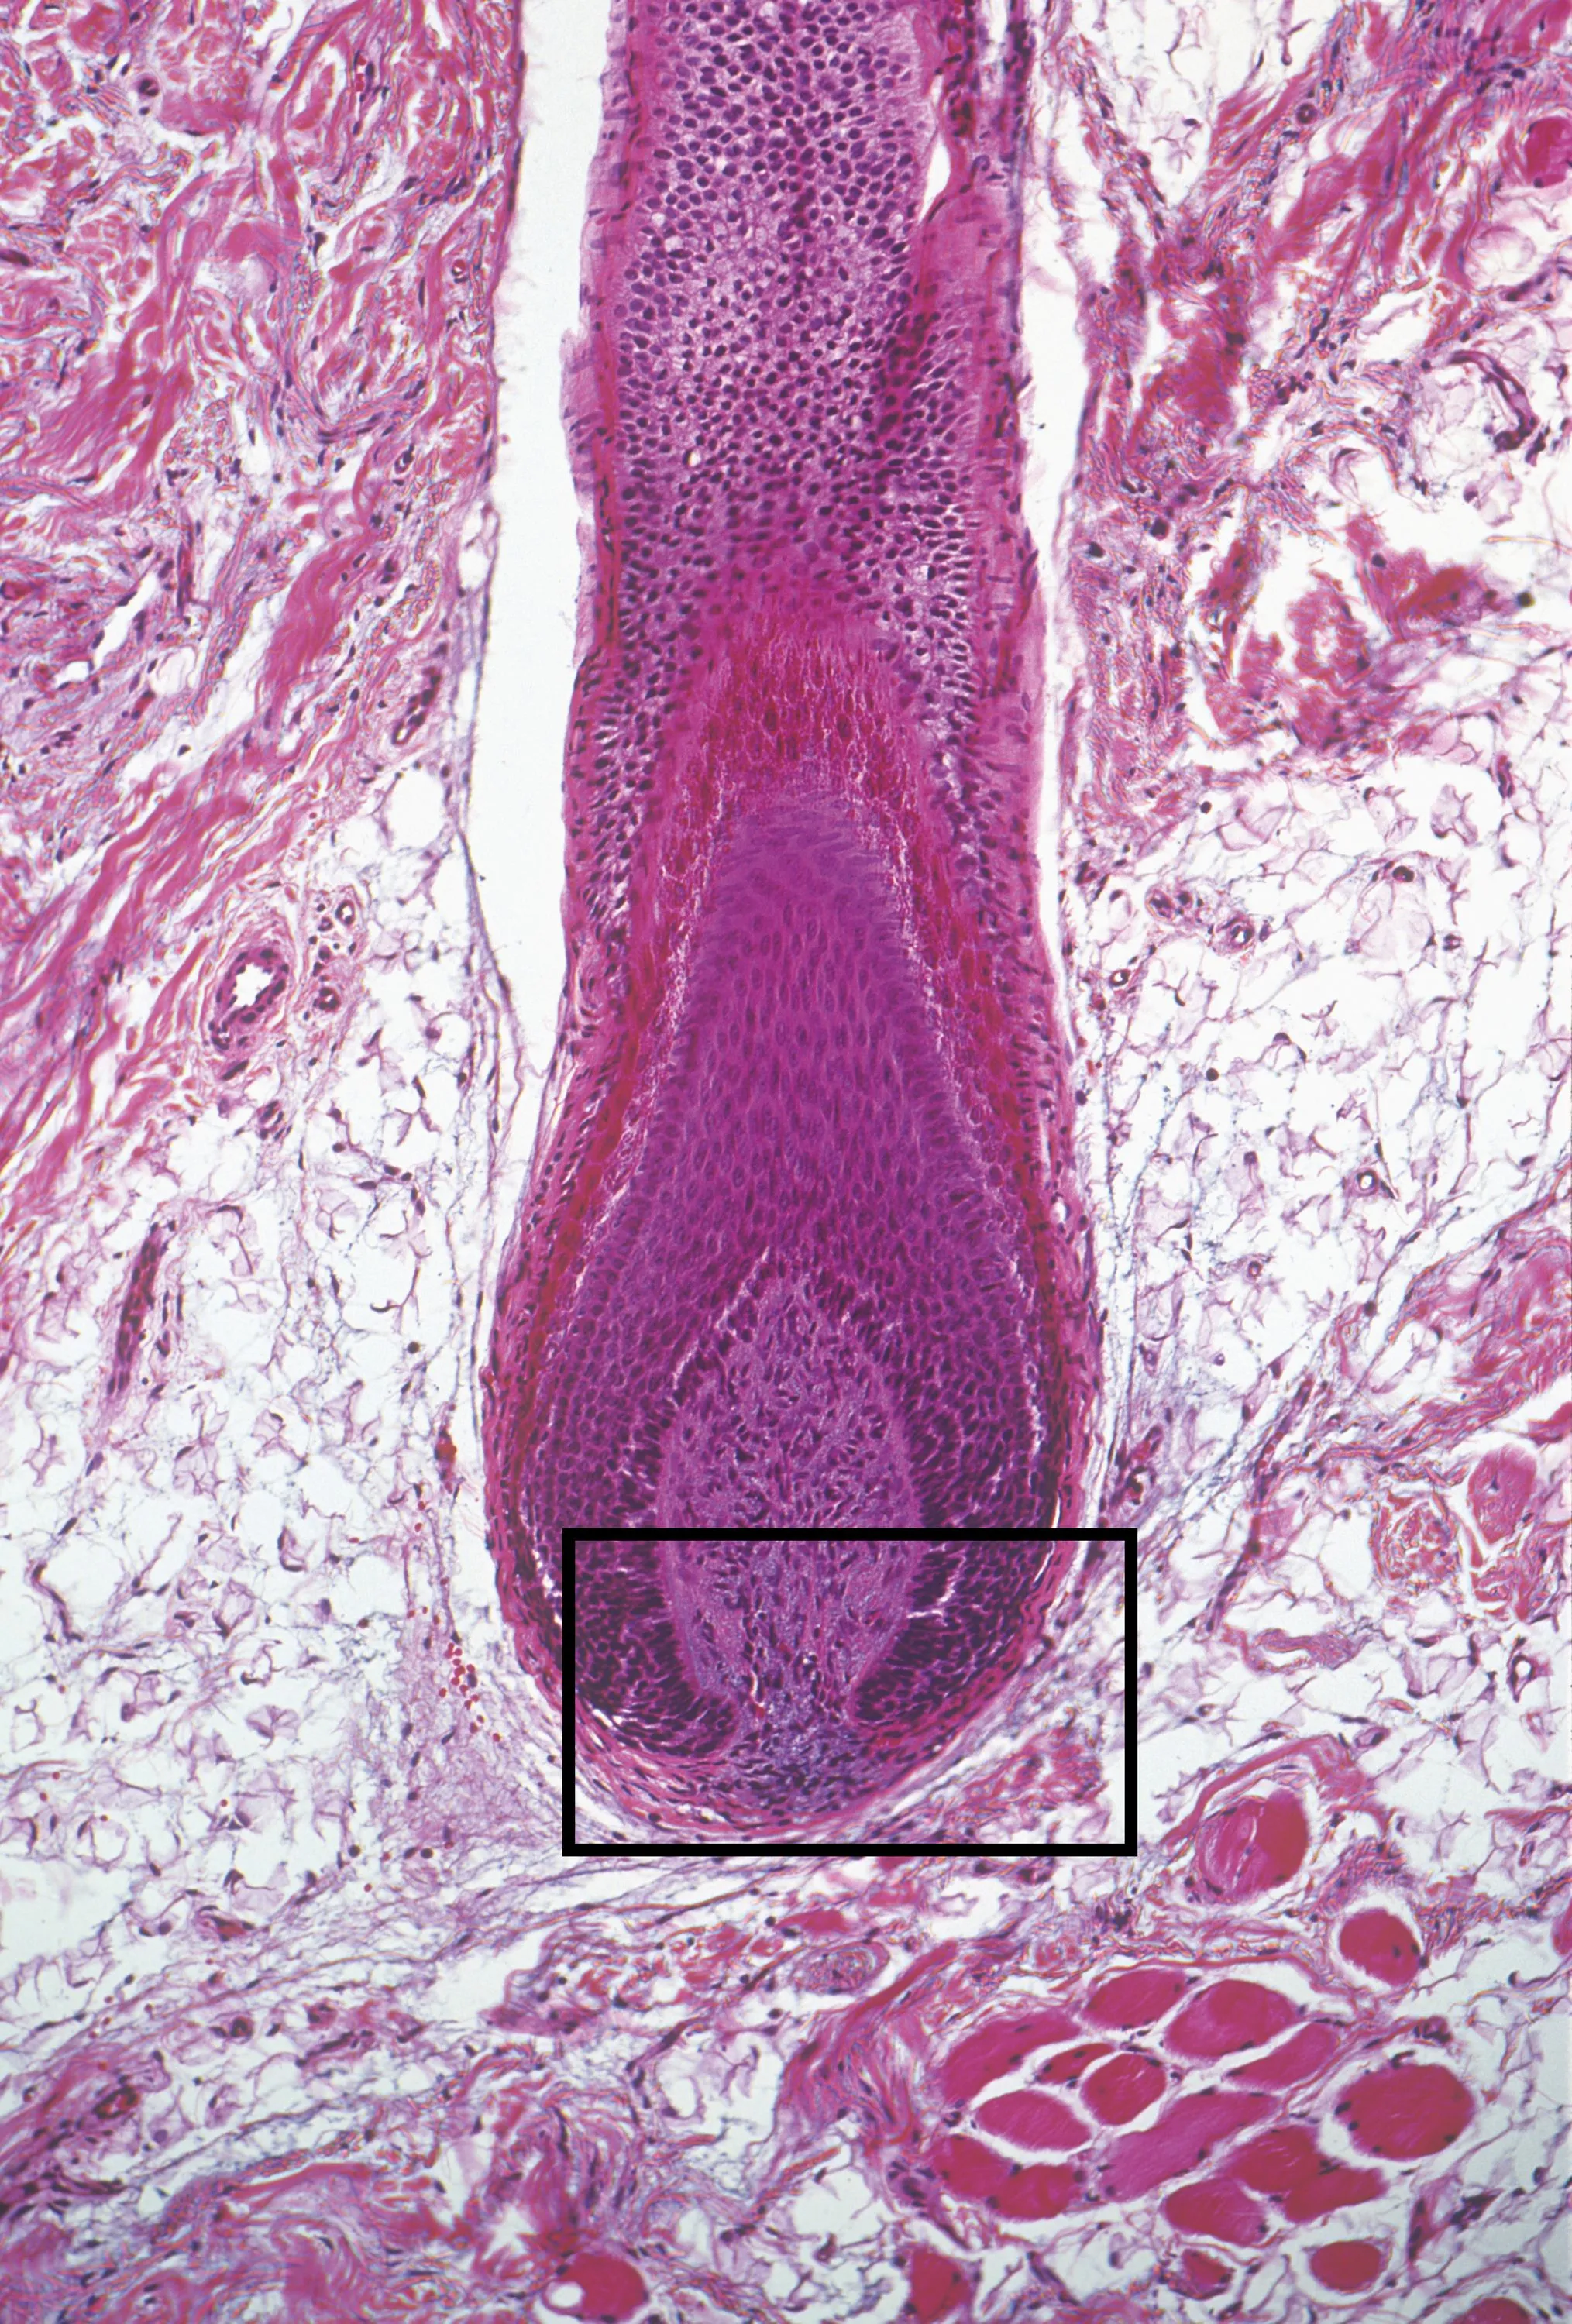 Base d'un cheveu observée au
microscope (grossissement : X52).